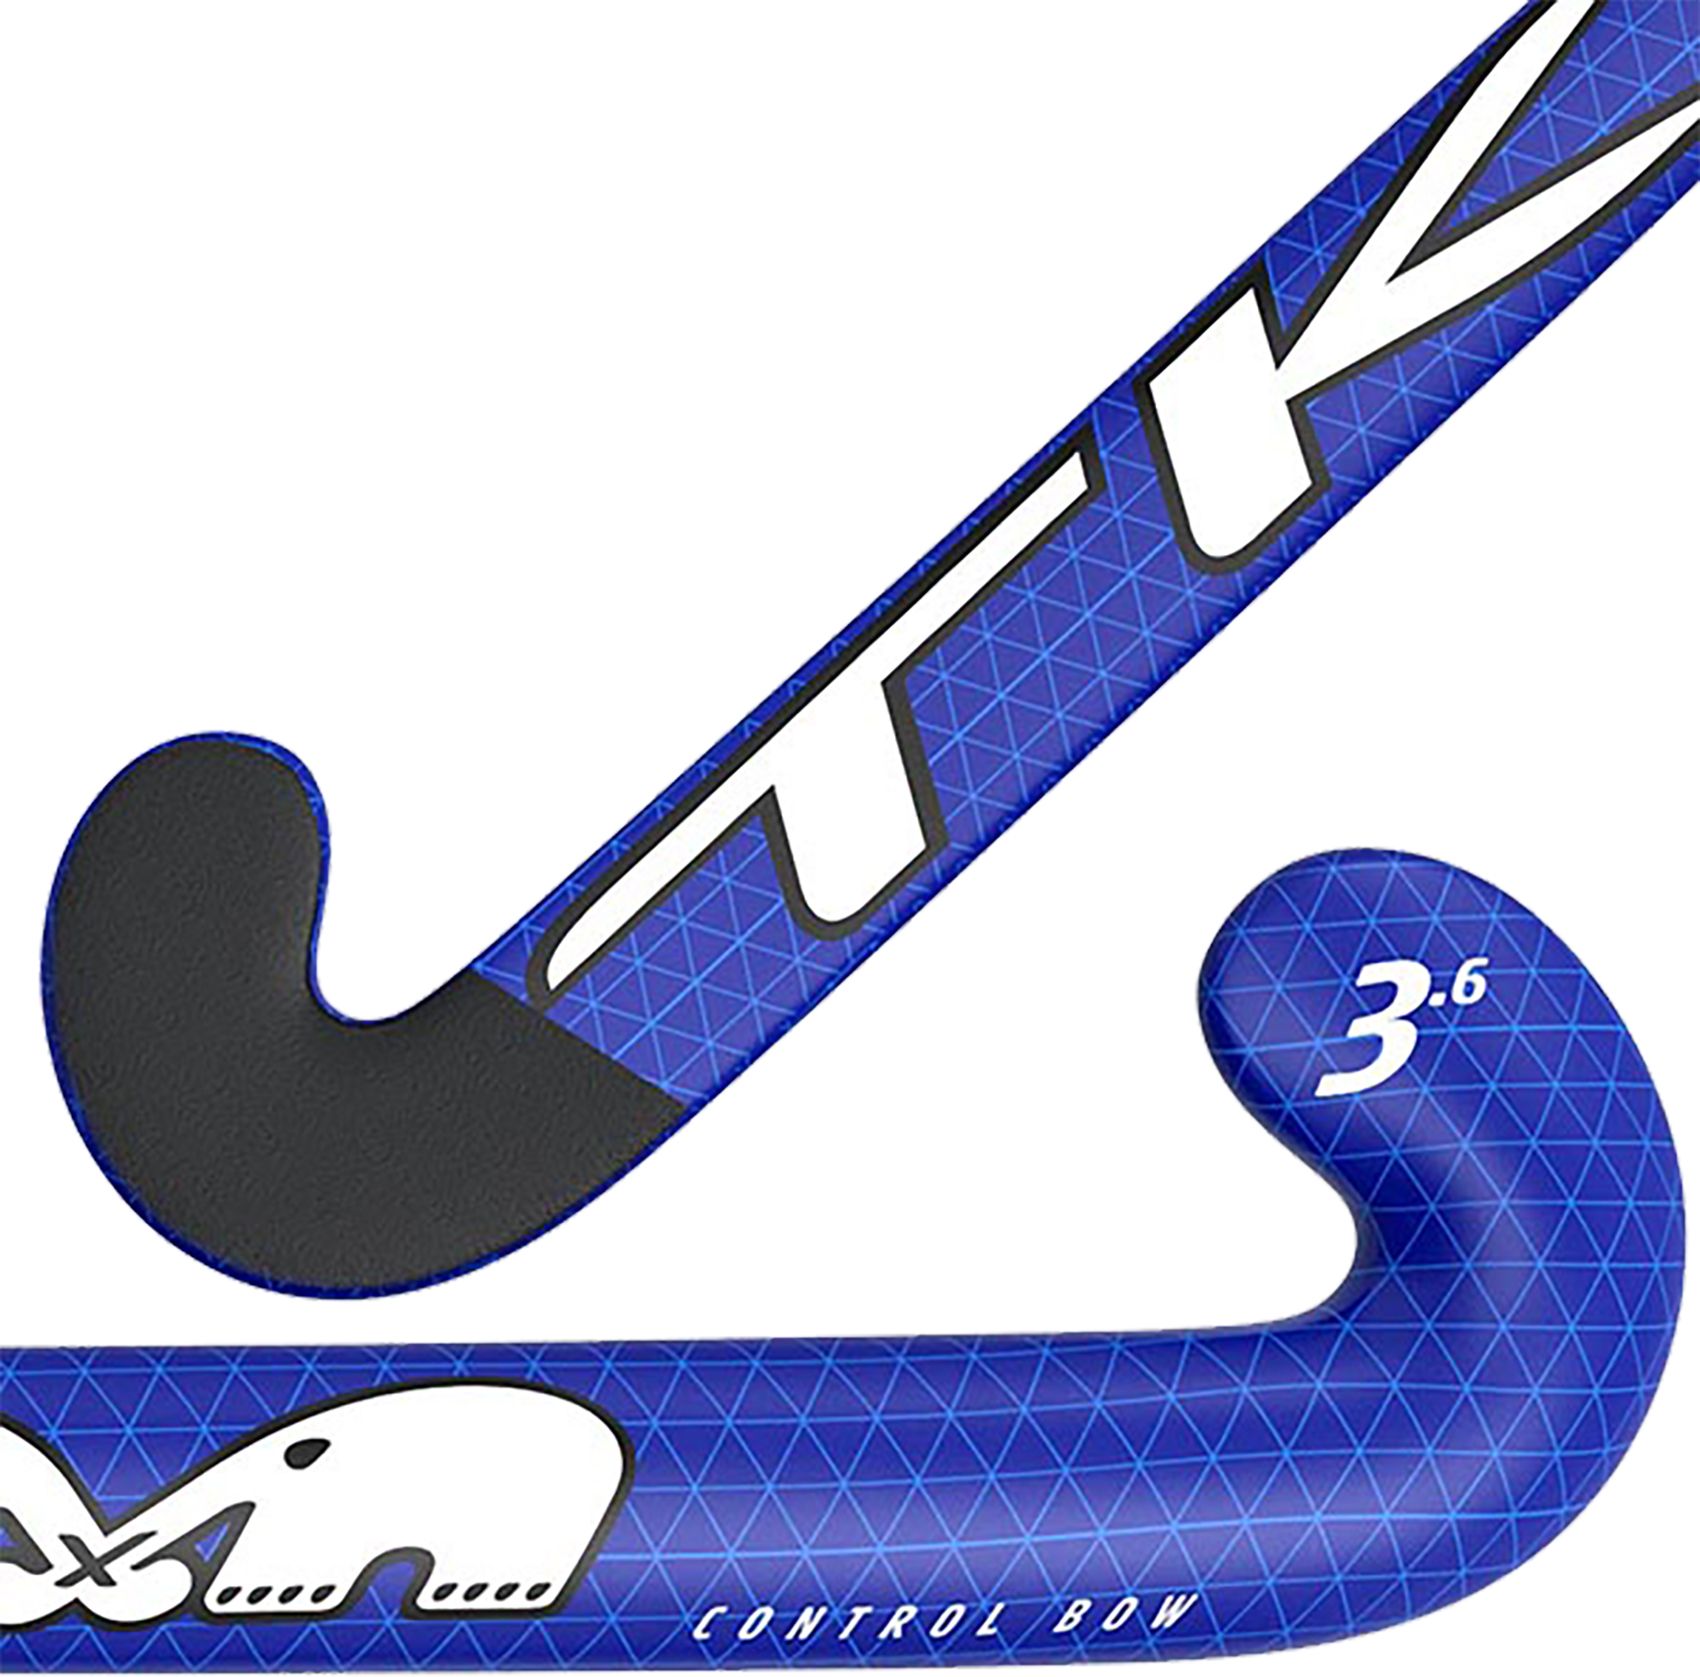 TK1 Plus Gold Extreme Bow Field Hockey Stick - A43-458